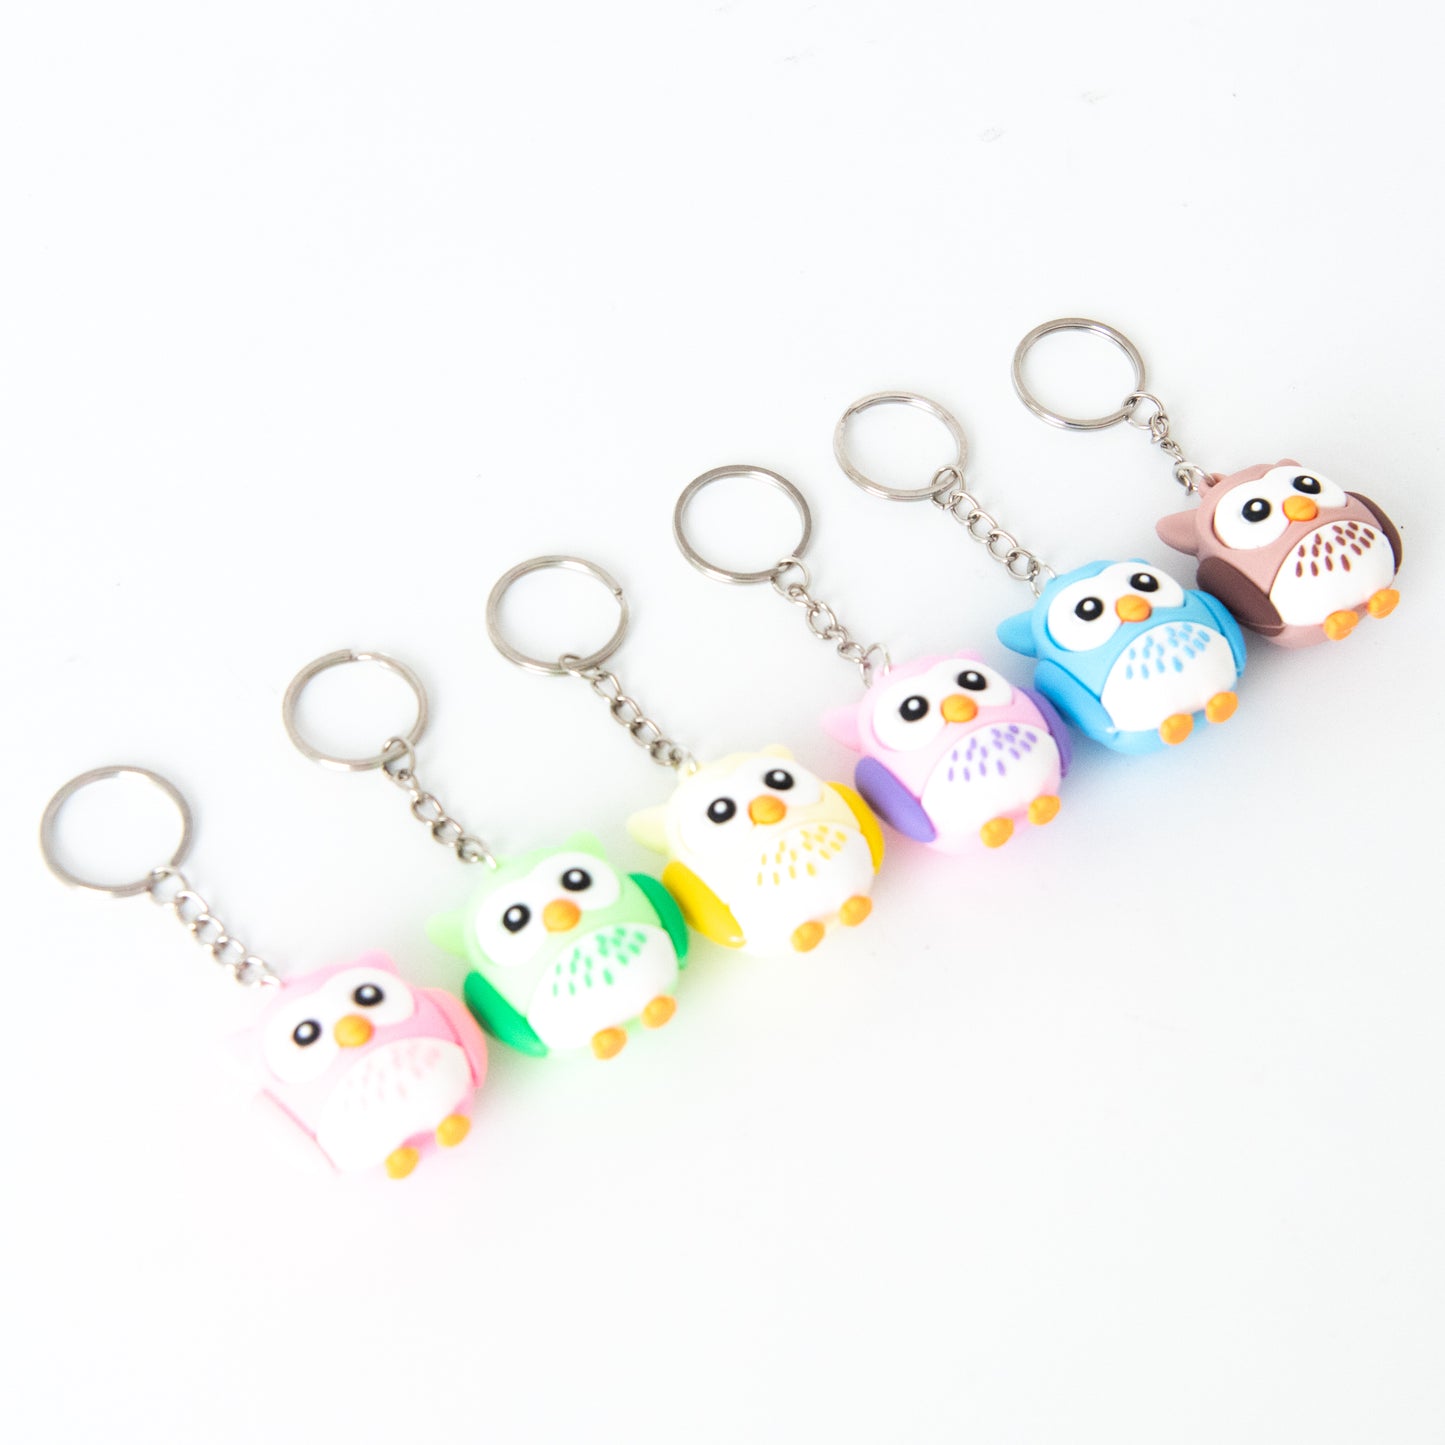 Owl Key Chain - Random Color S$2.00 (u.p S$5.00)